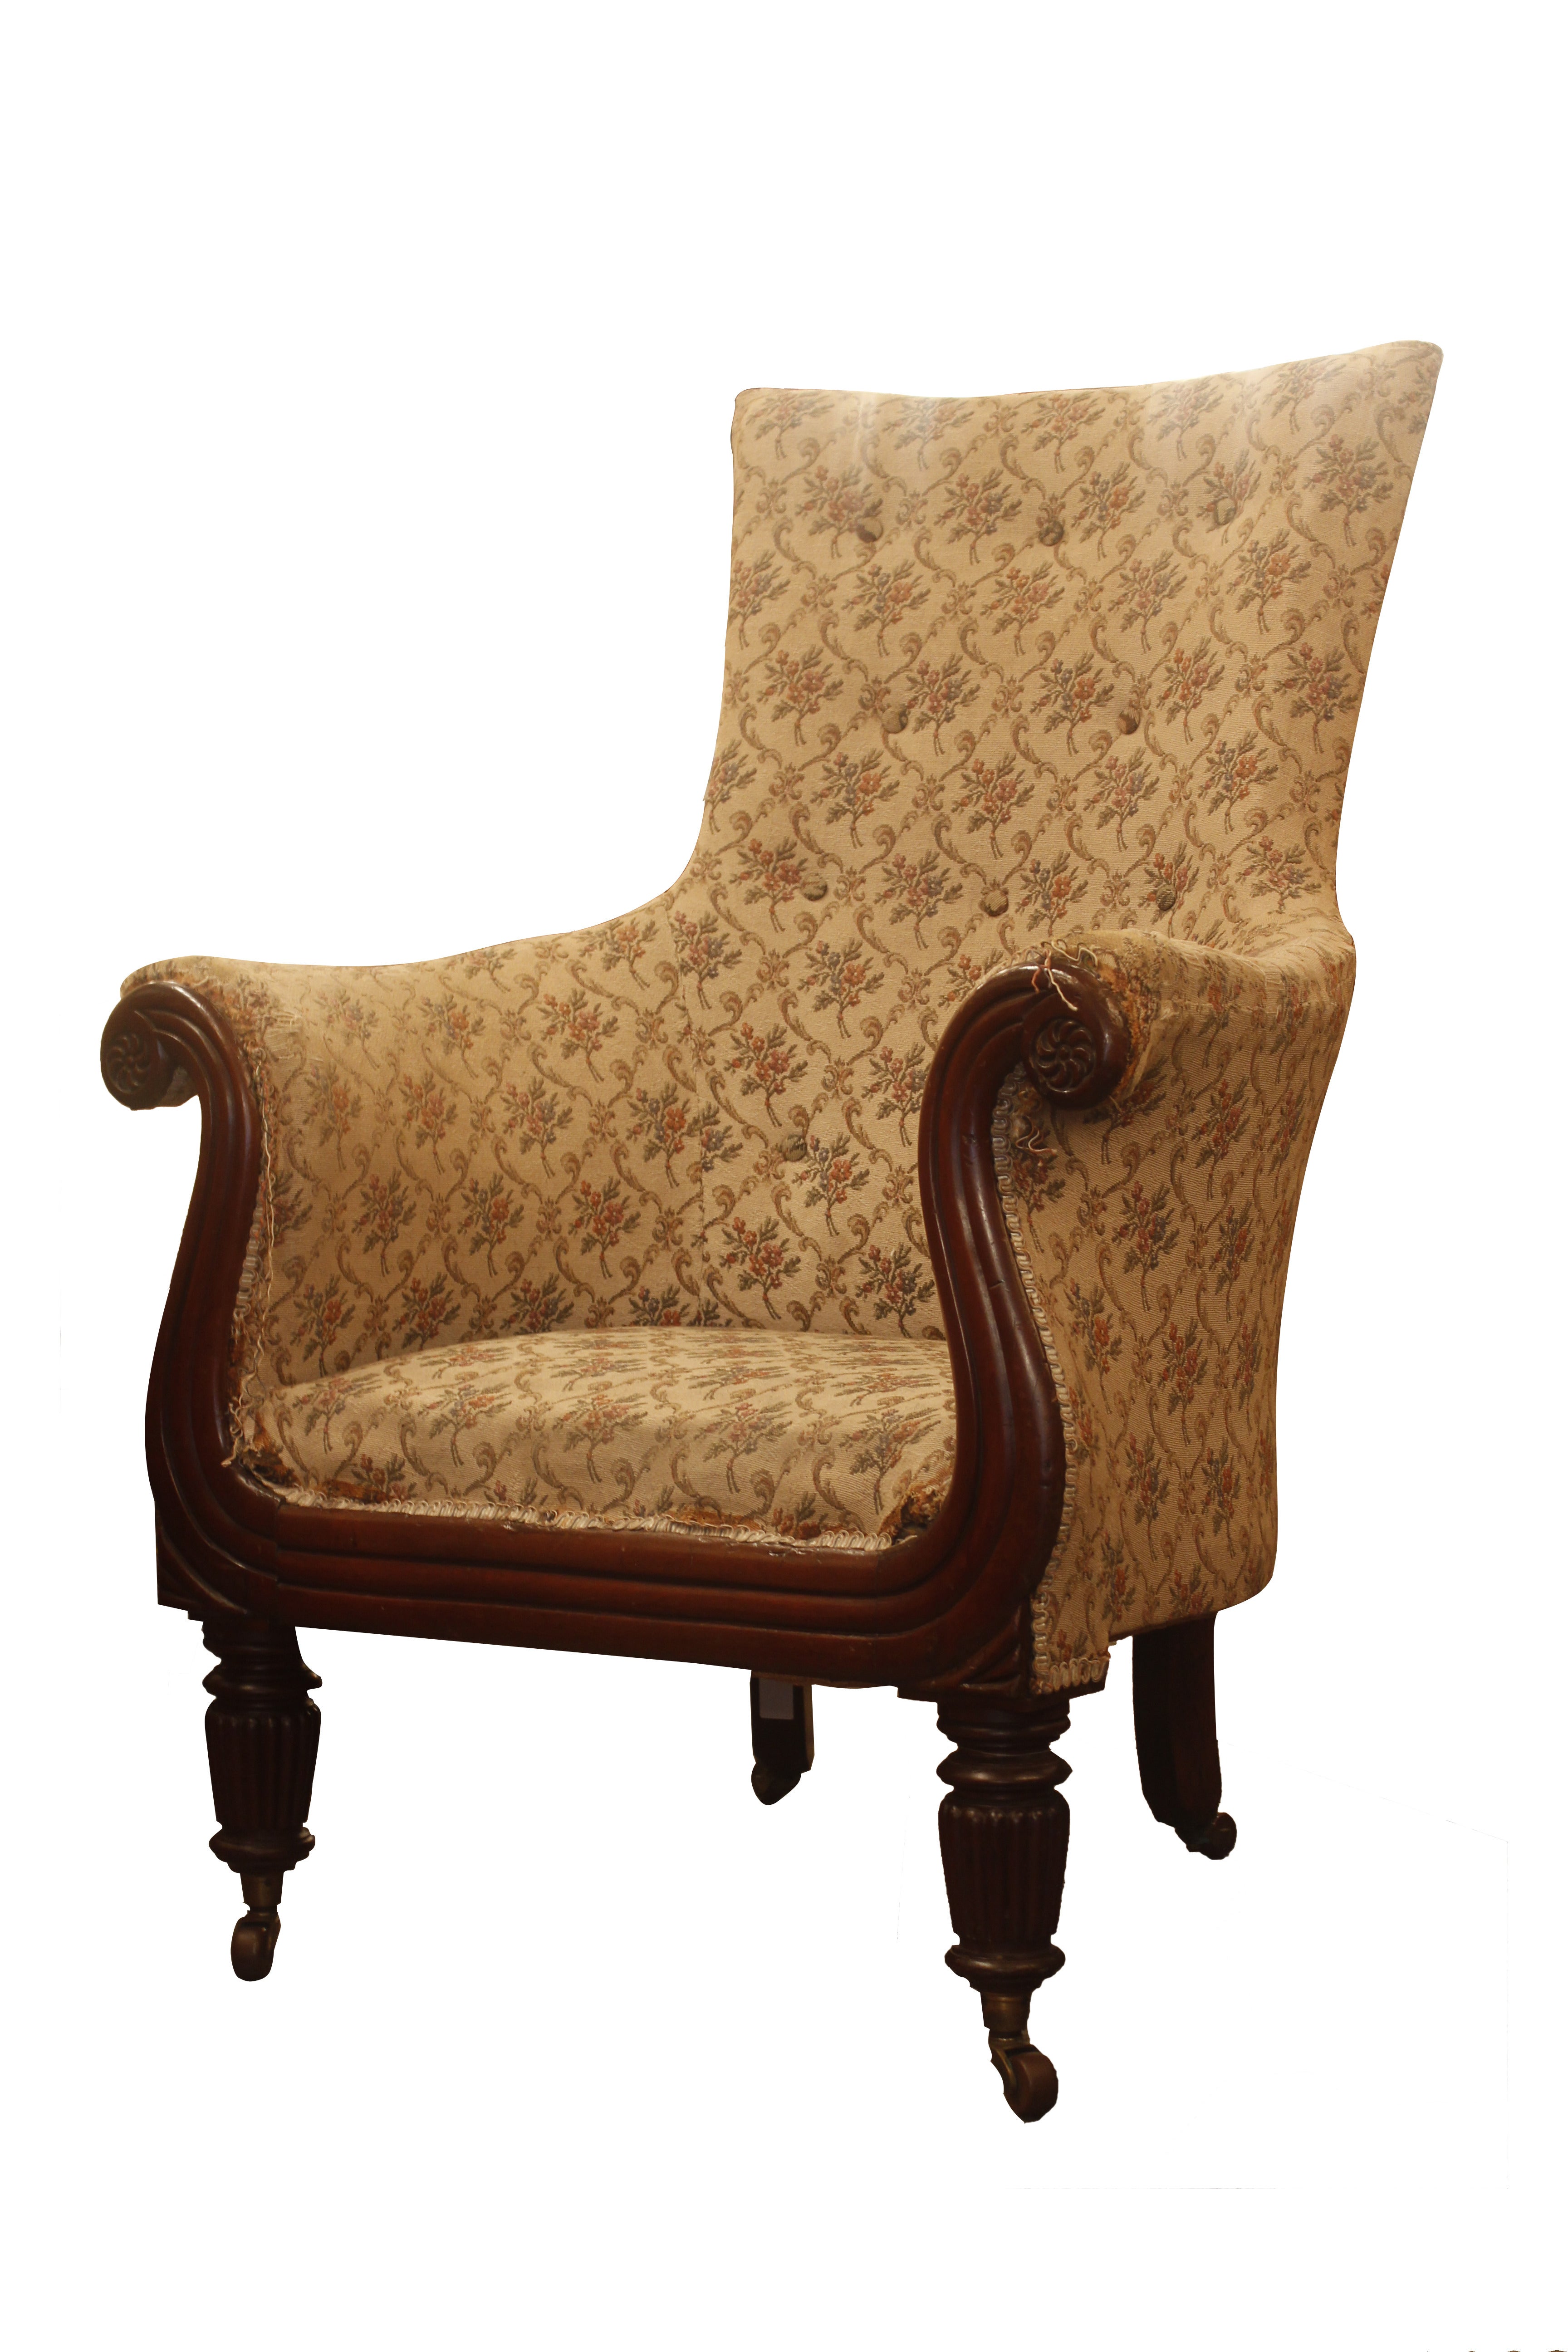 William IV Mahogany Chair